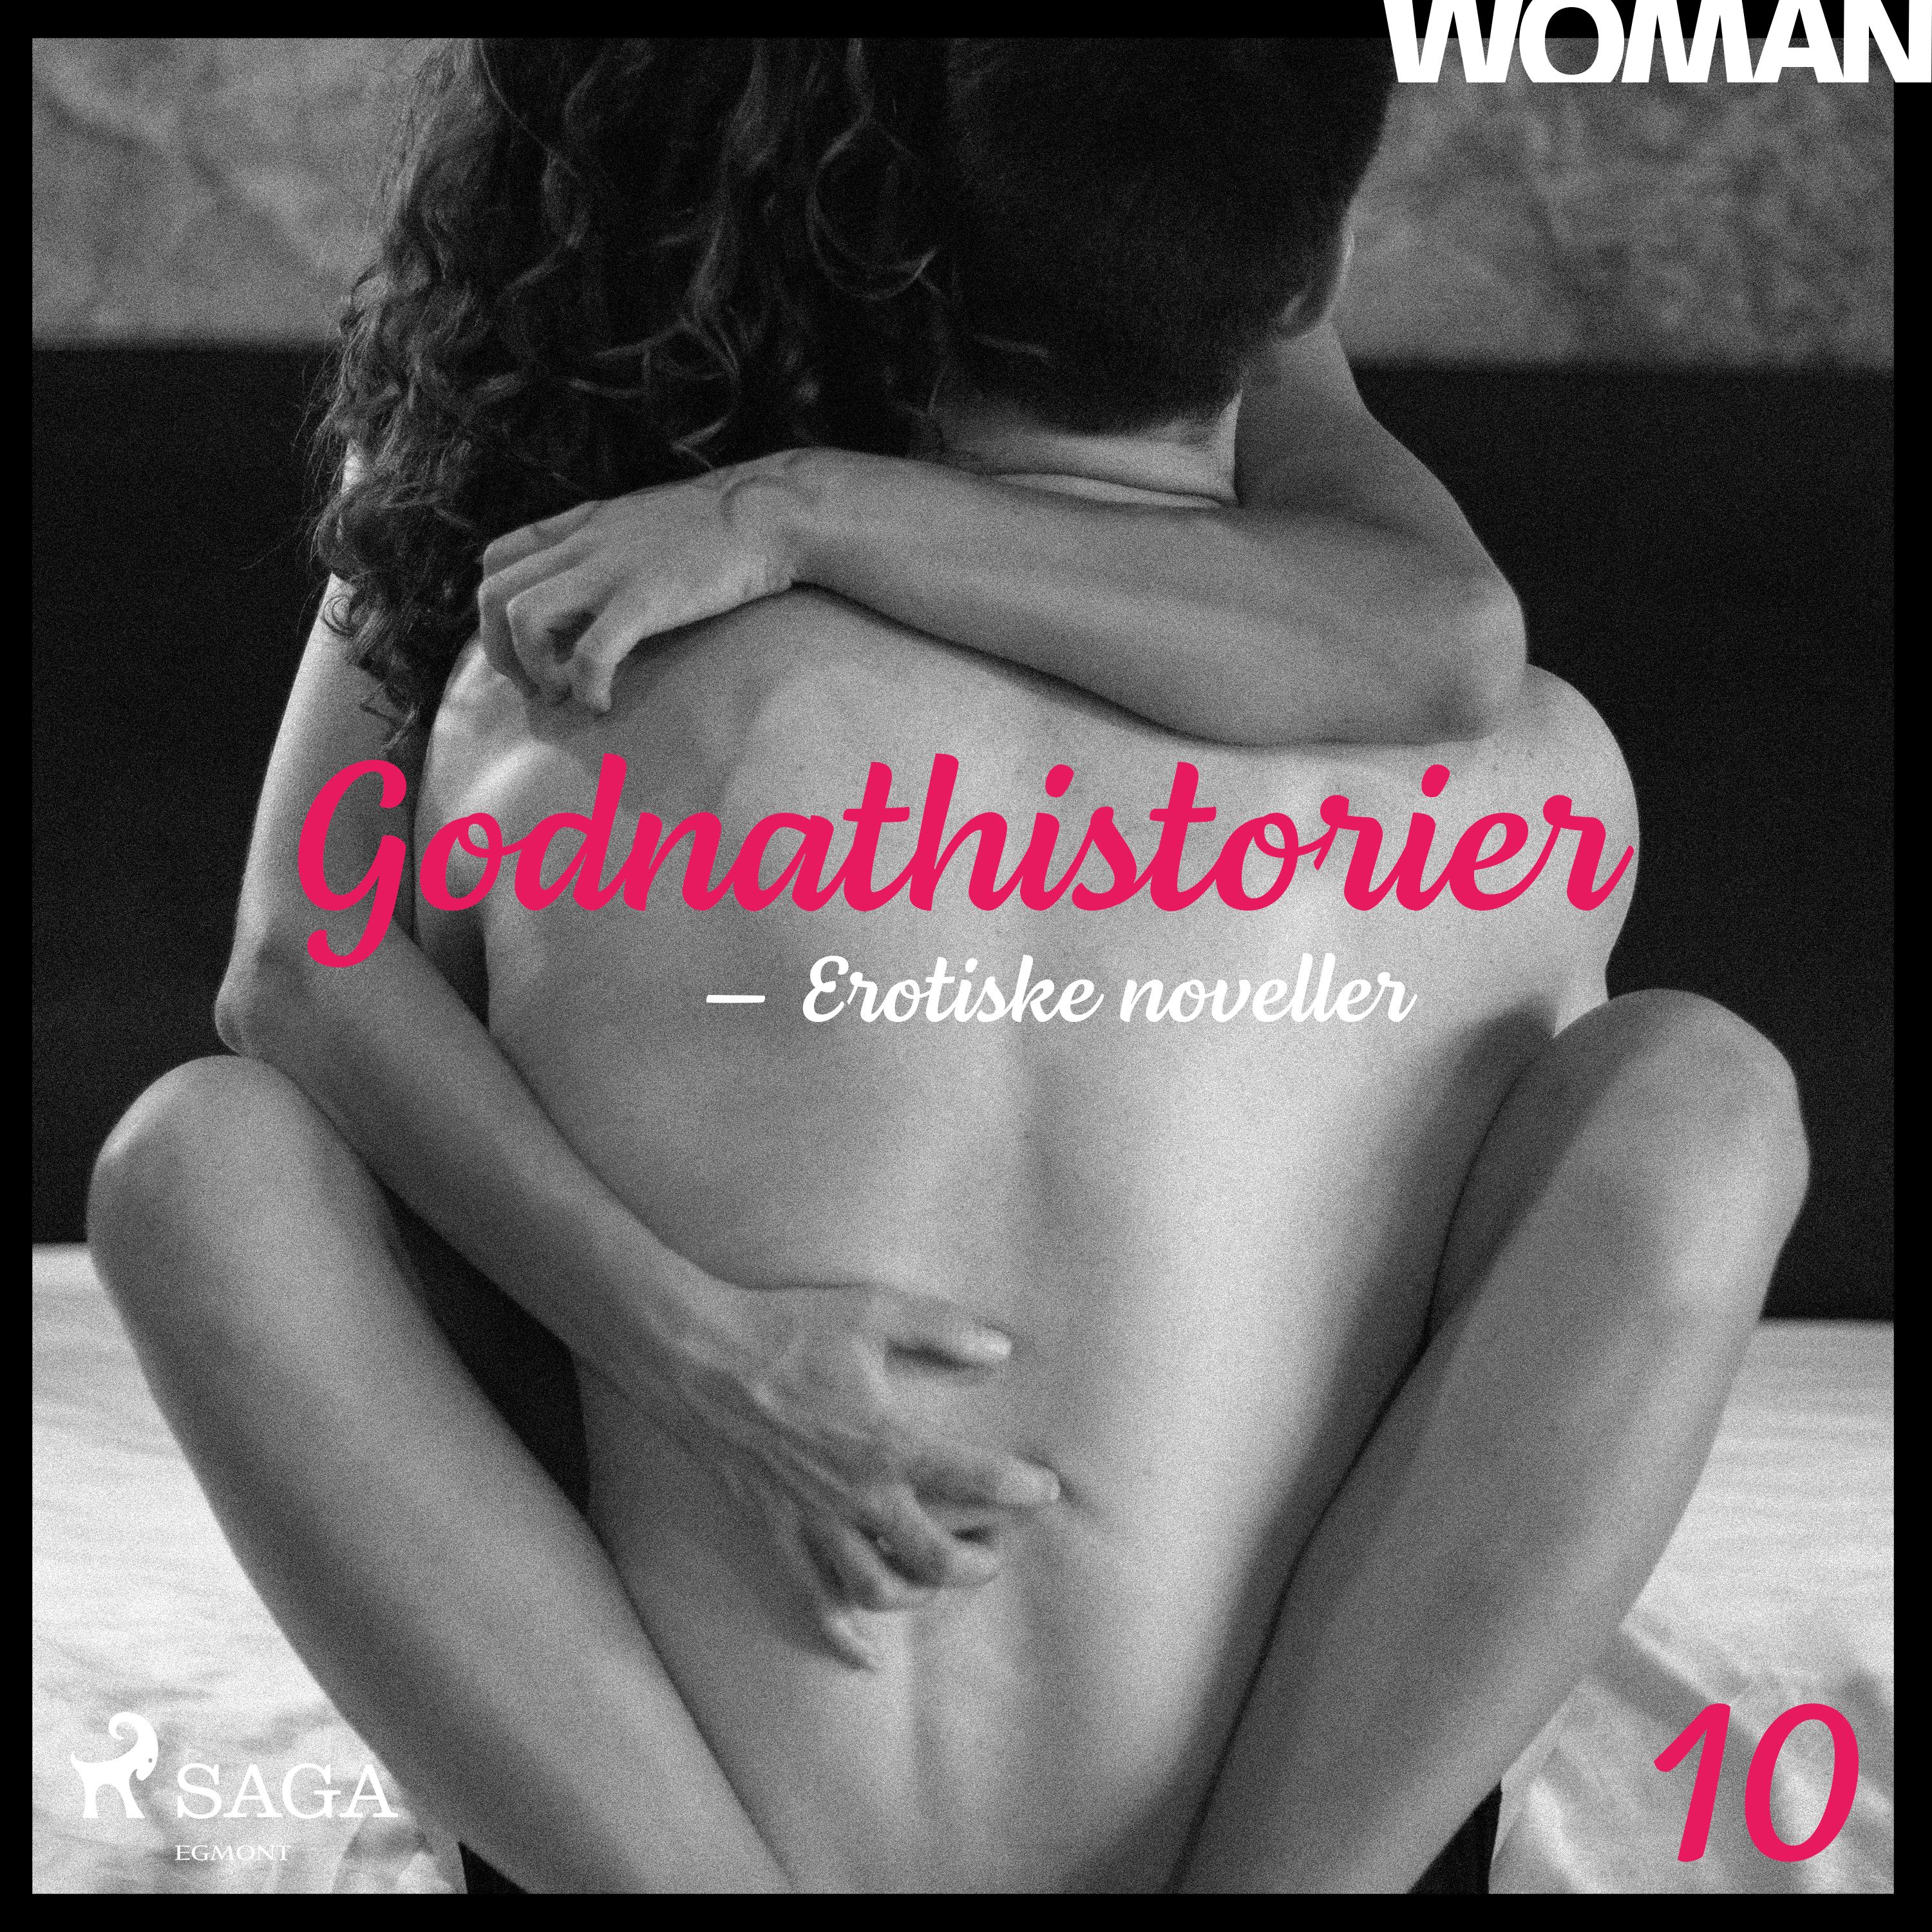 Godnathistorier - WOMAN - 10, ljudbok av Woman - Diverse Forfattere